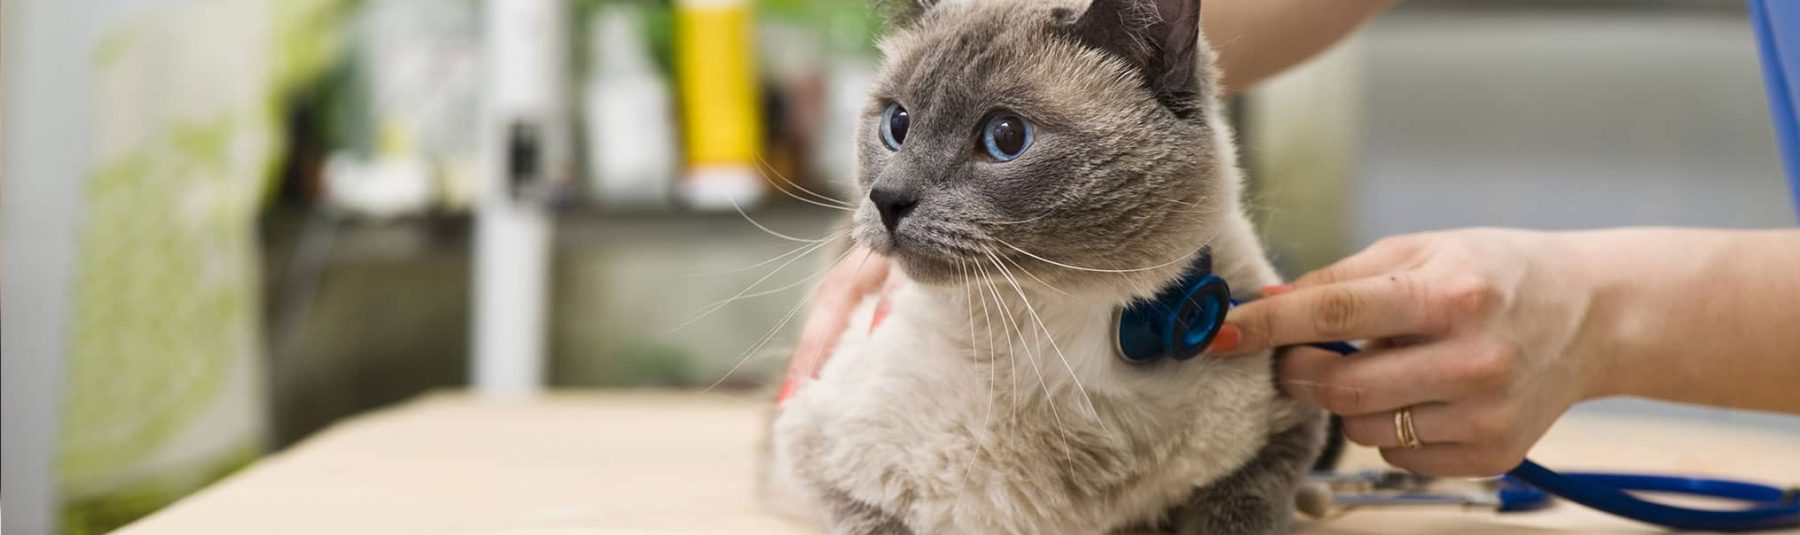 Cat Vaccinations Feline Shots Treatments Avon Southampton Pet Hospital